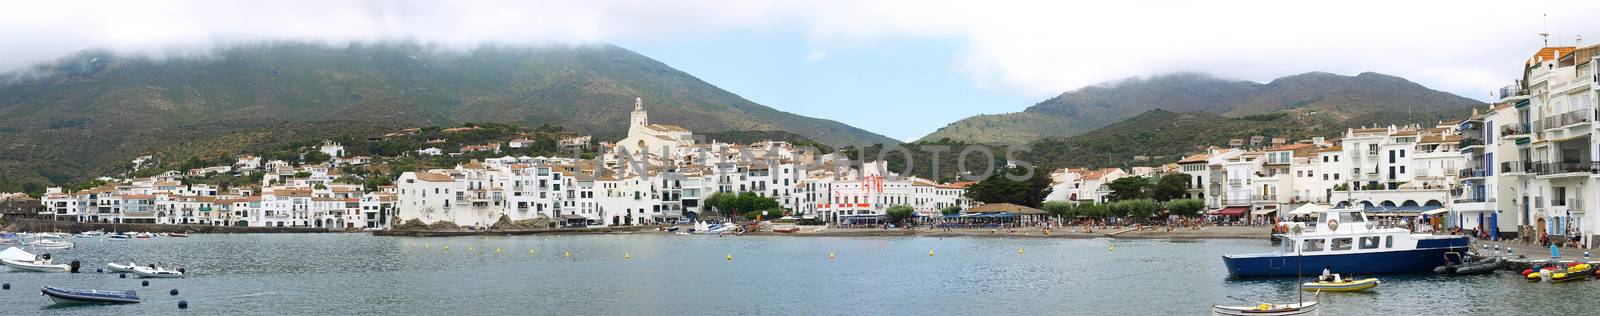 View of village of Cadaques (Costa Brava, Catalonia, Spain)